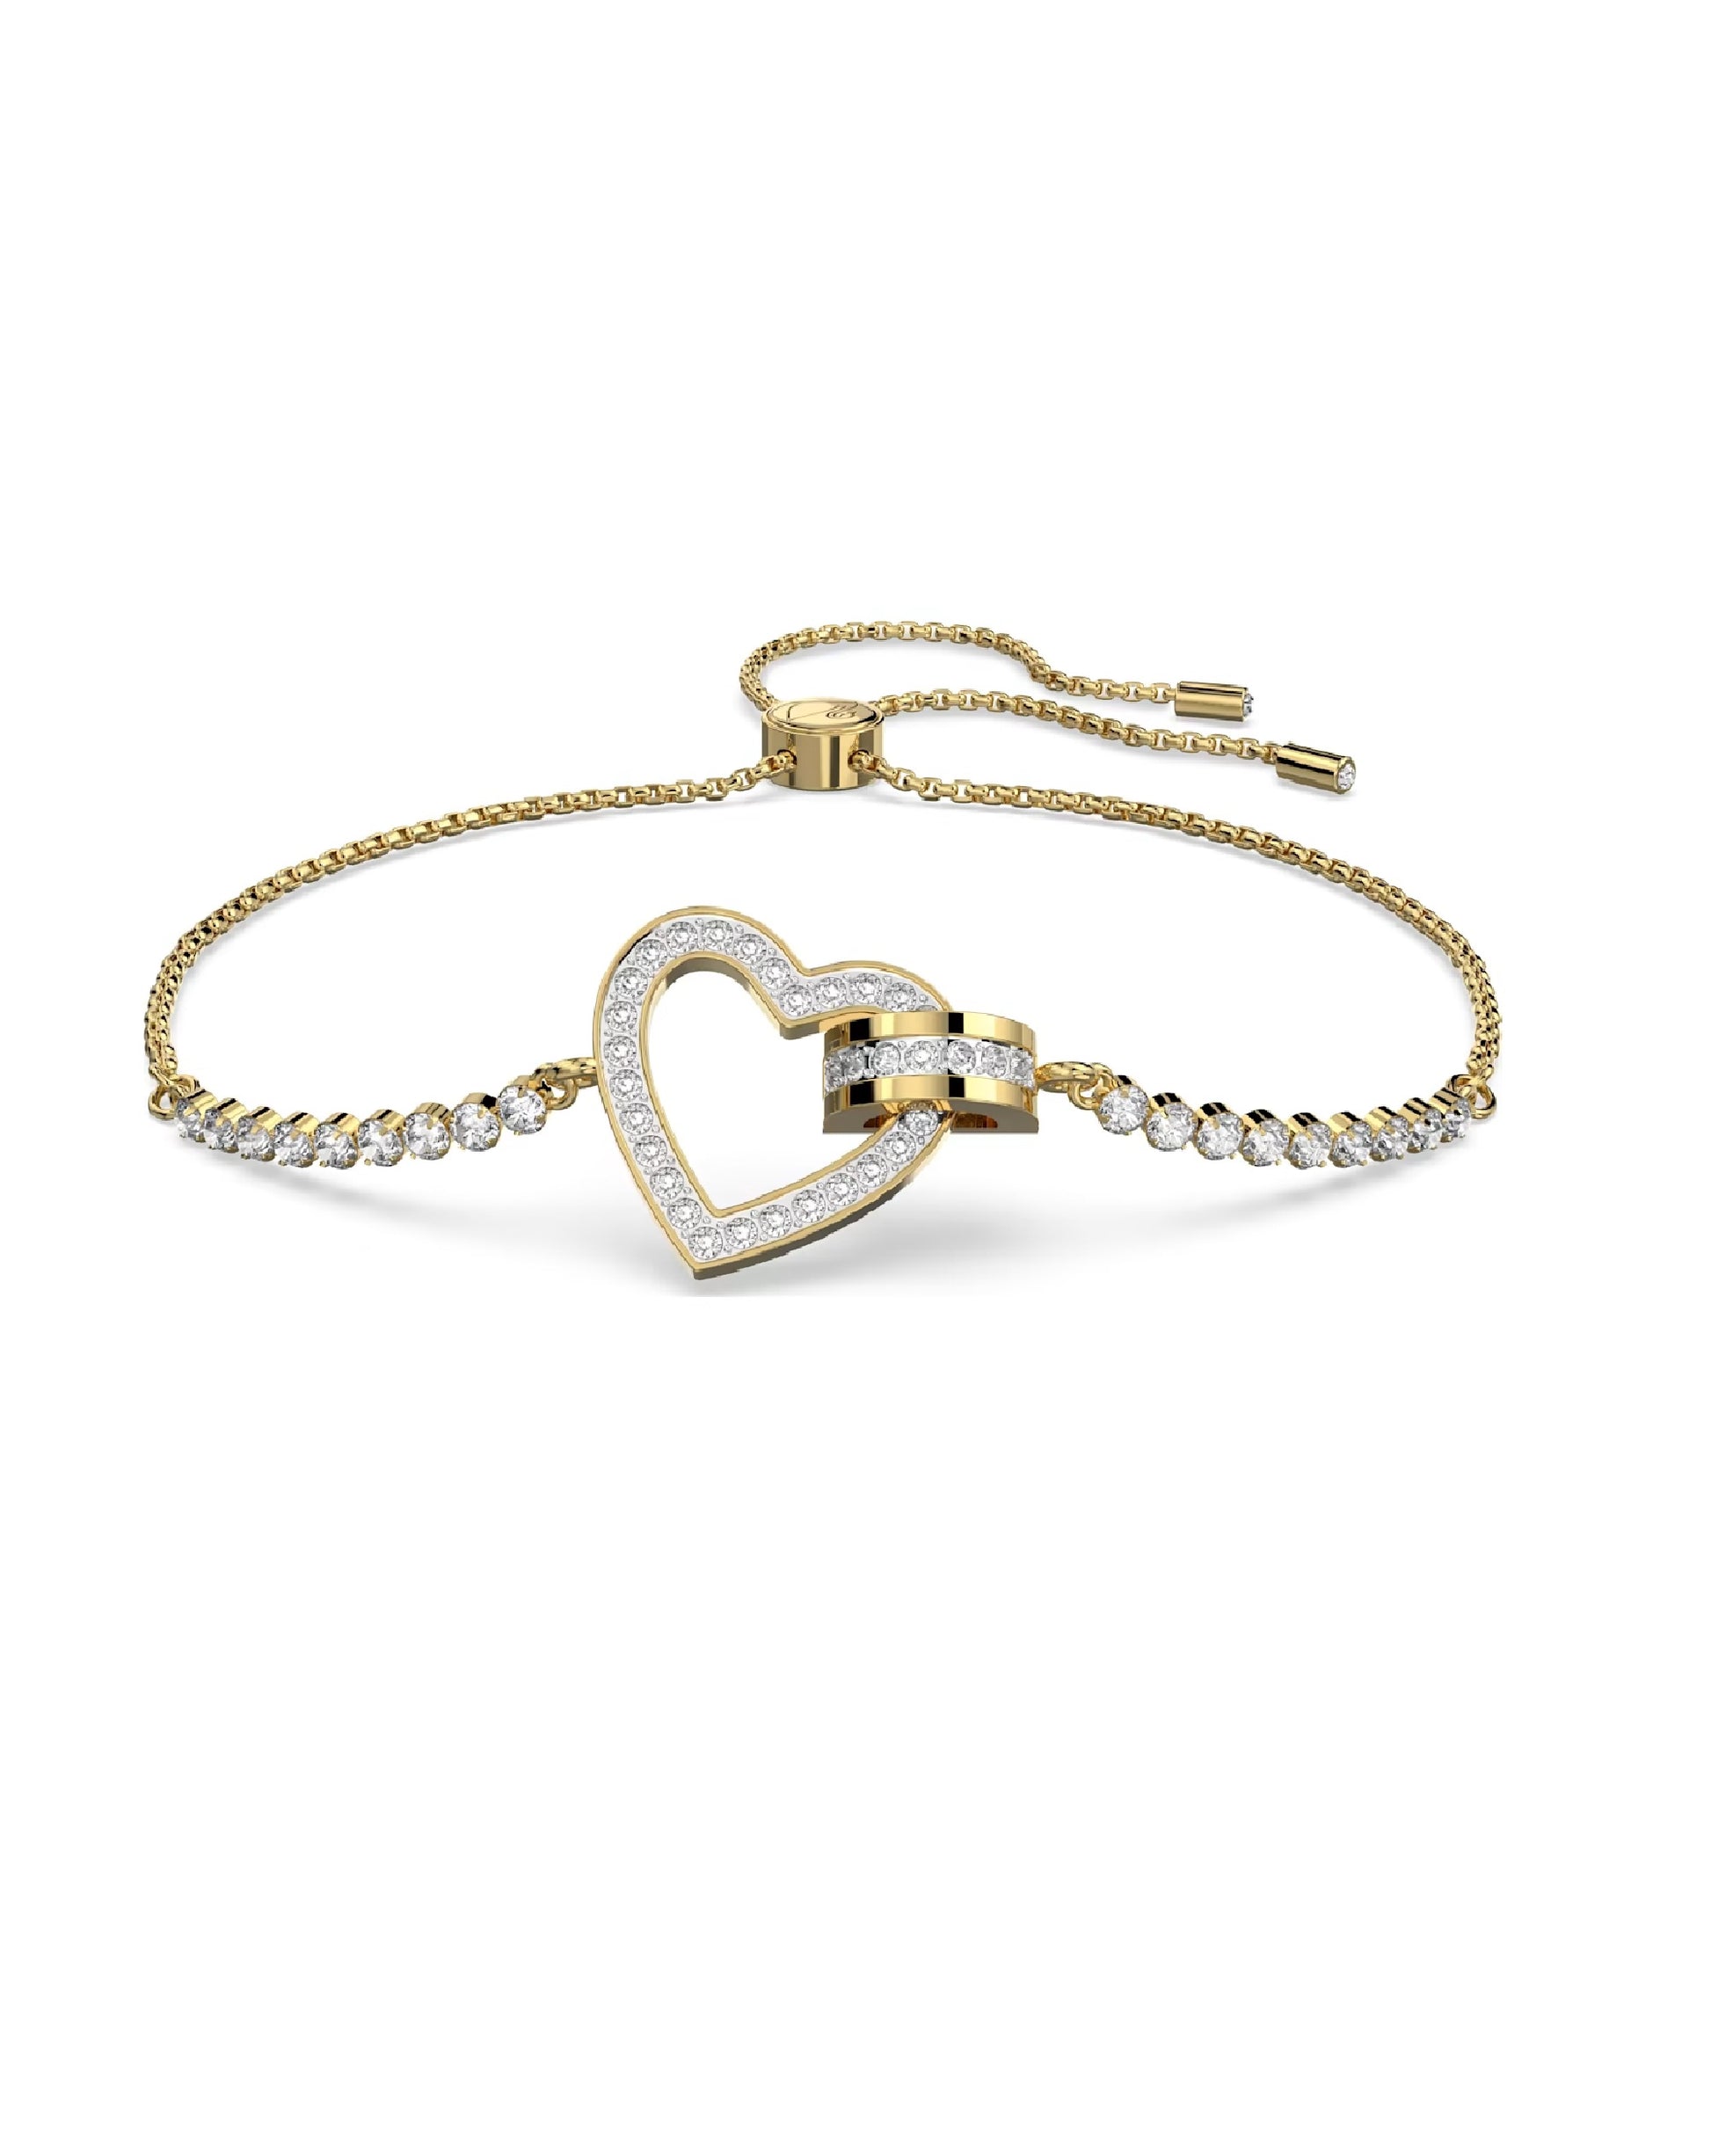 Swarovski 5636964 Swarovski LOVELY Heart Bracelet, Yellow Gold Tone Plated Bracelets